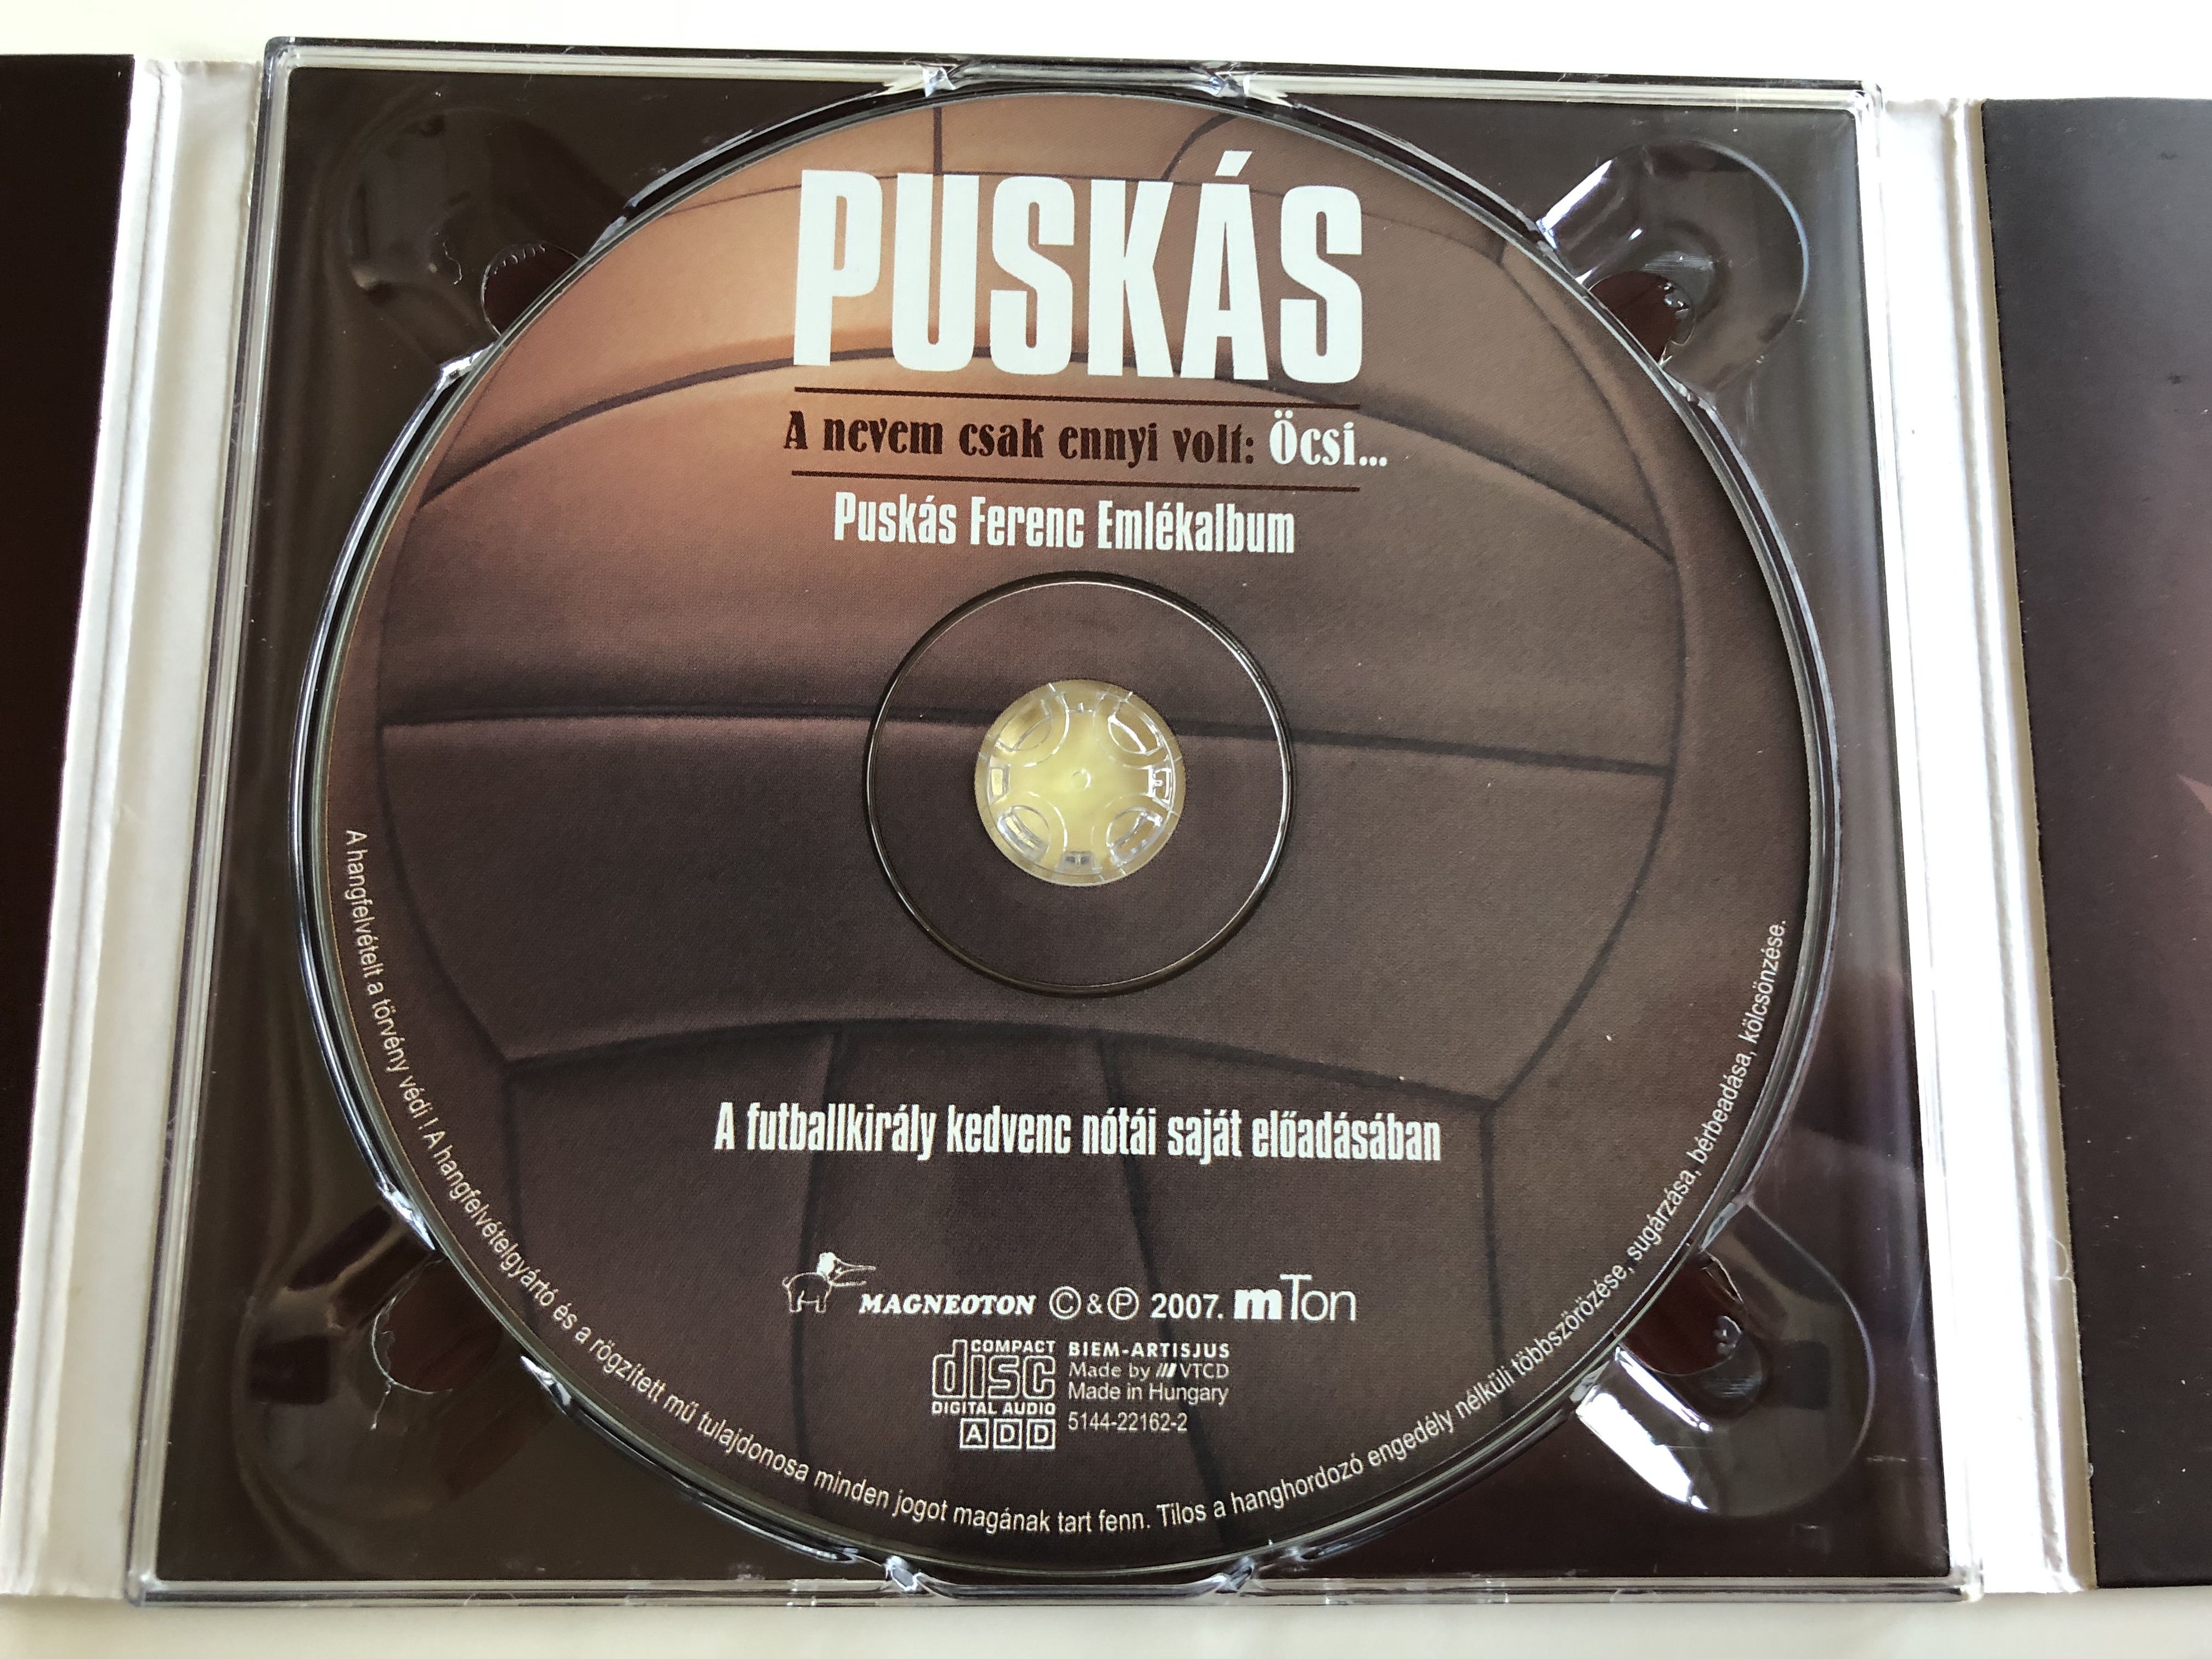 pusk-s-a-nevem-csak-ennyi-volt-csi...-audio-cd-2007-pusk-s-ferenc-eml-kalbum-a-futballegenda-kedvenc-n-t-i-saj-t-el-ad-sban-magneoton-4-.jpg